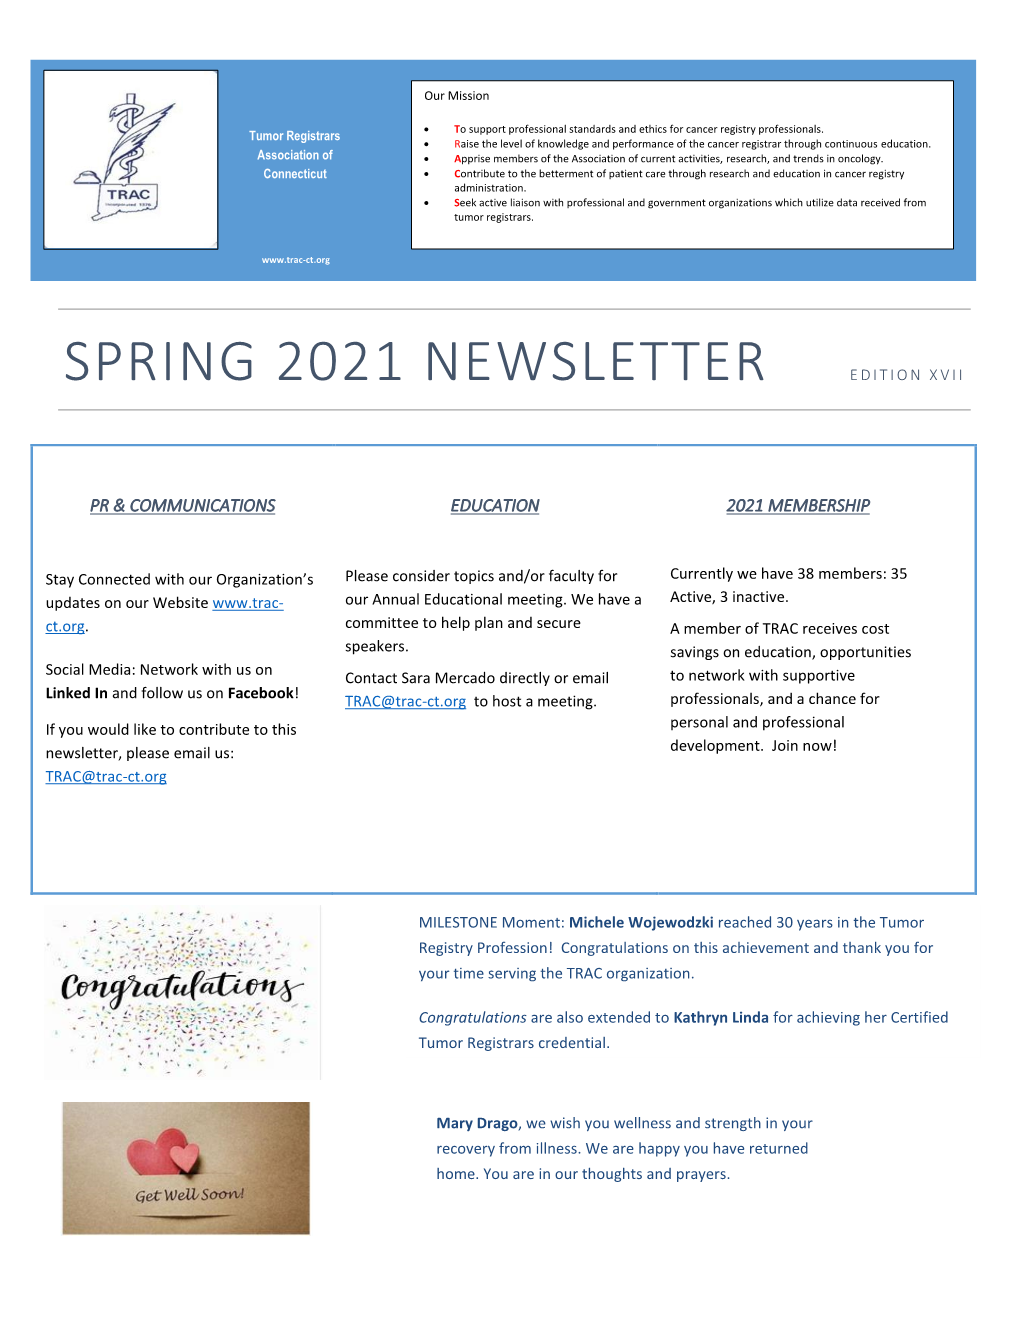 Spring 2021 Newsletter Edition Xvii